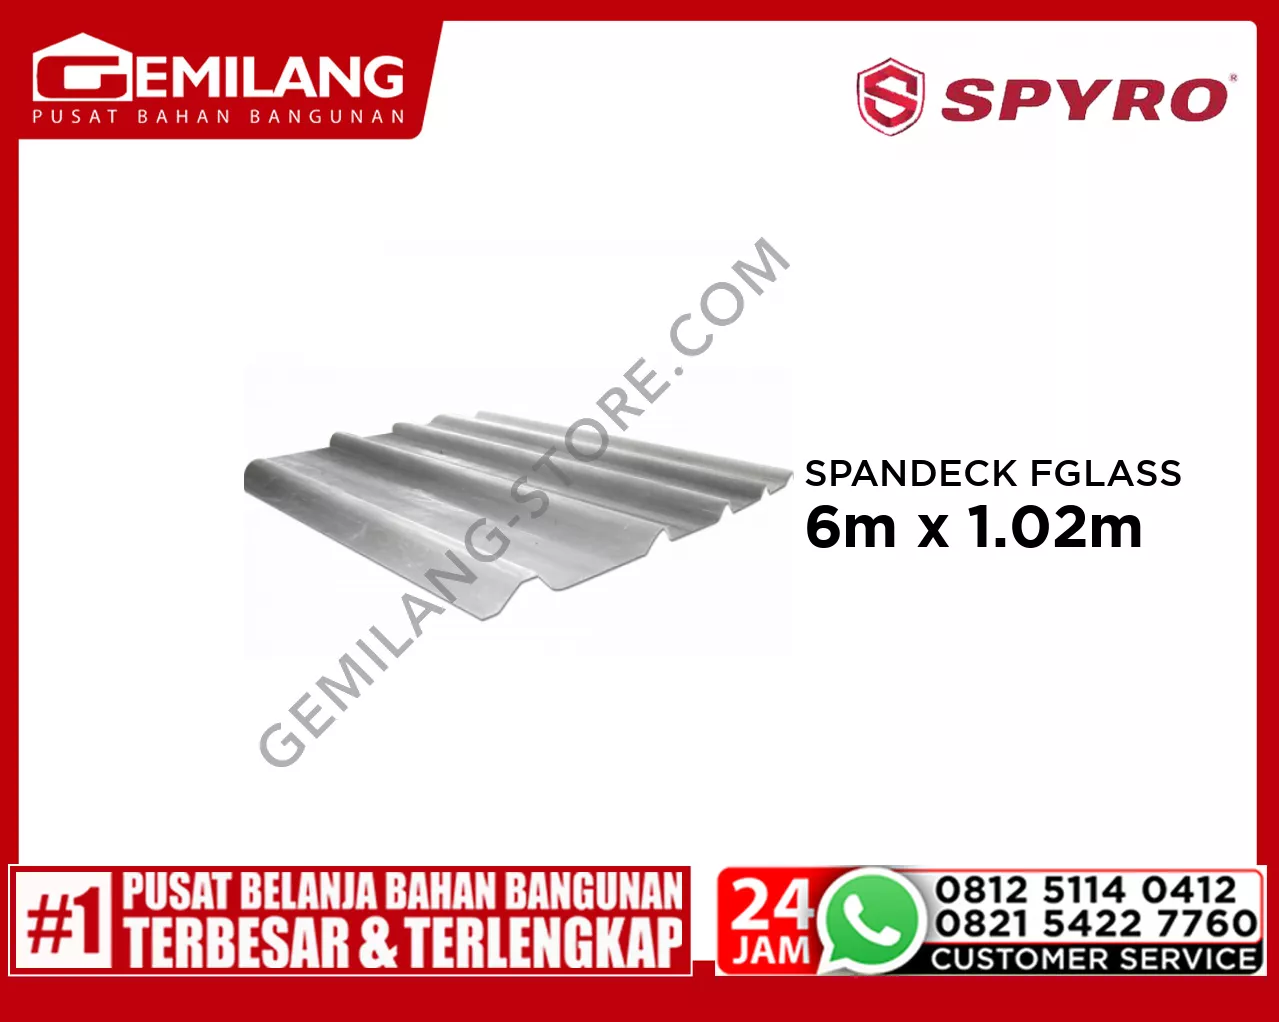 SPYRO SPANDECK FIBERGLASS 600cm x 102cm x 1.5mm